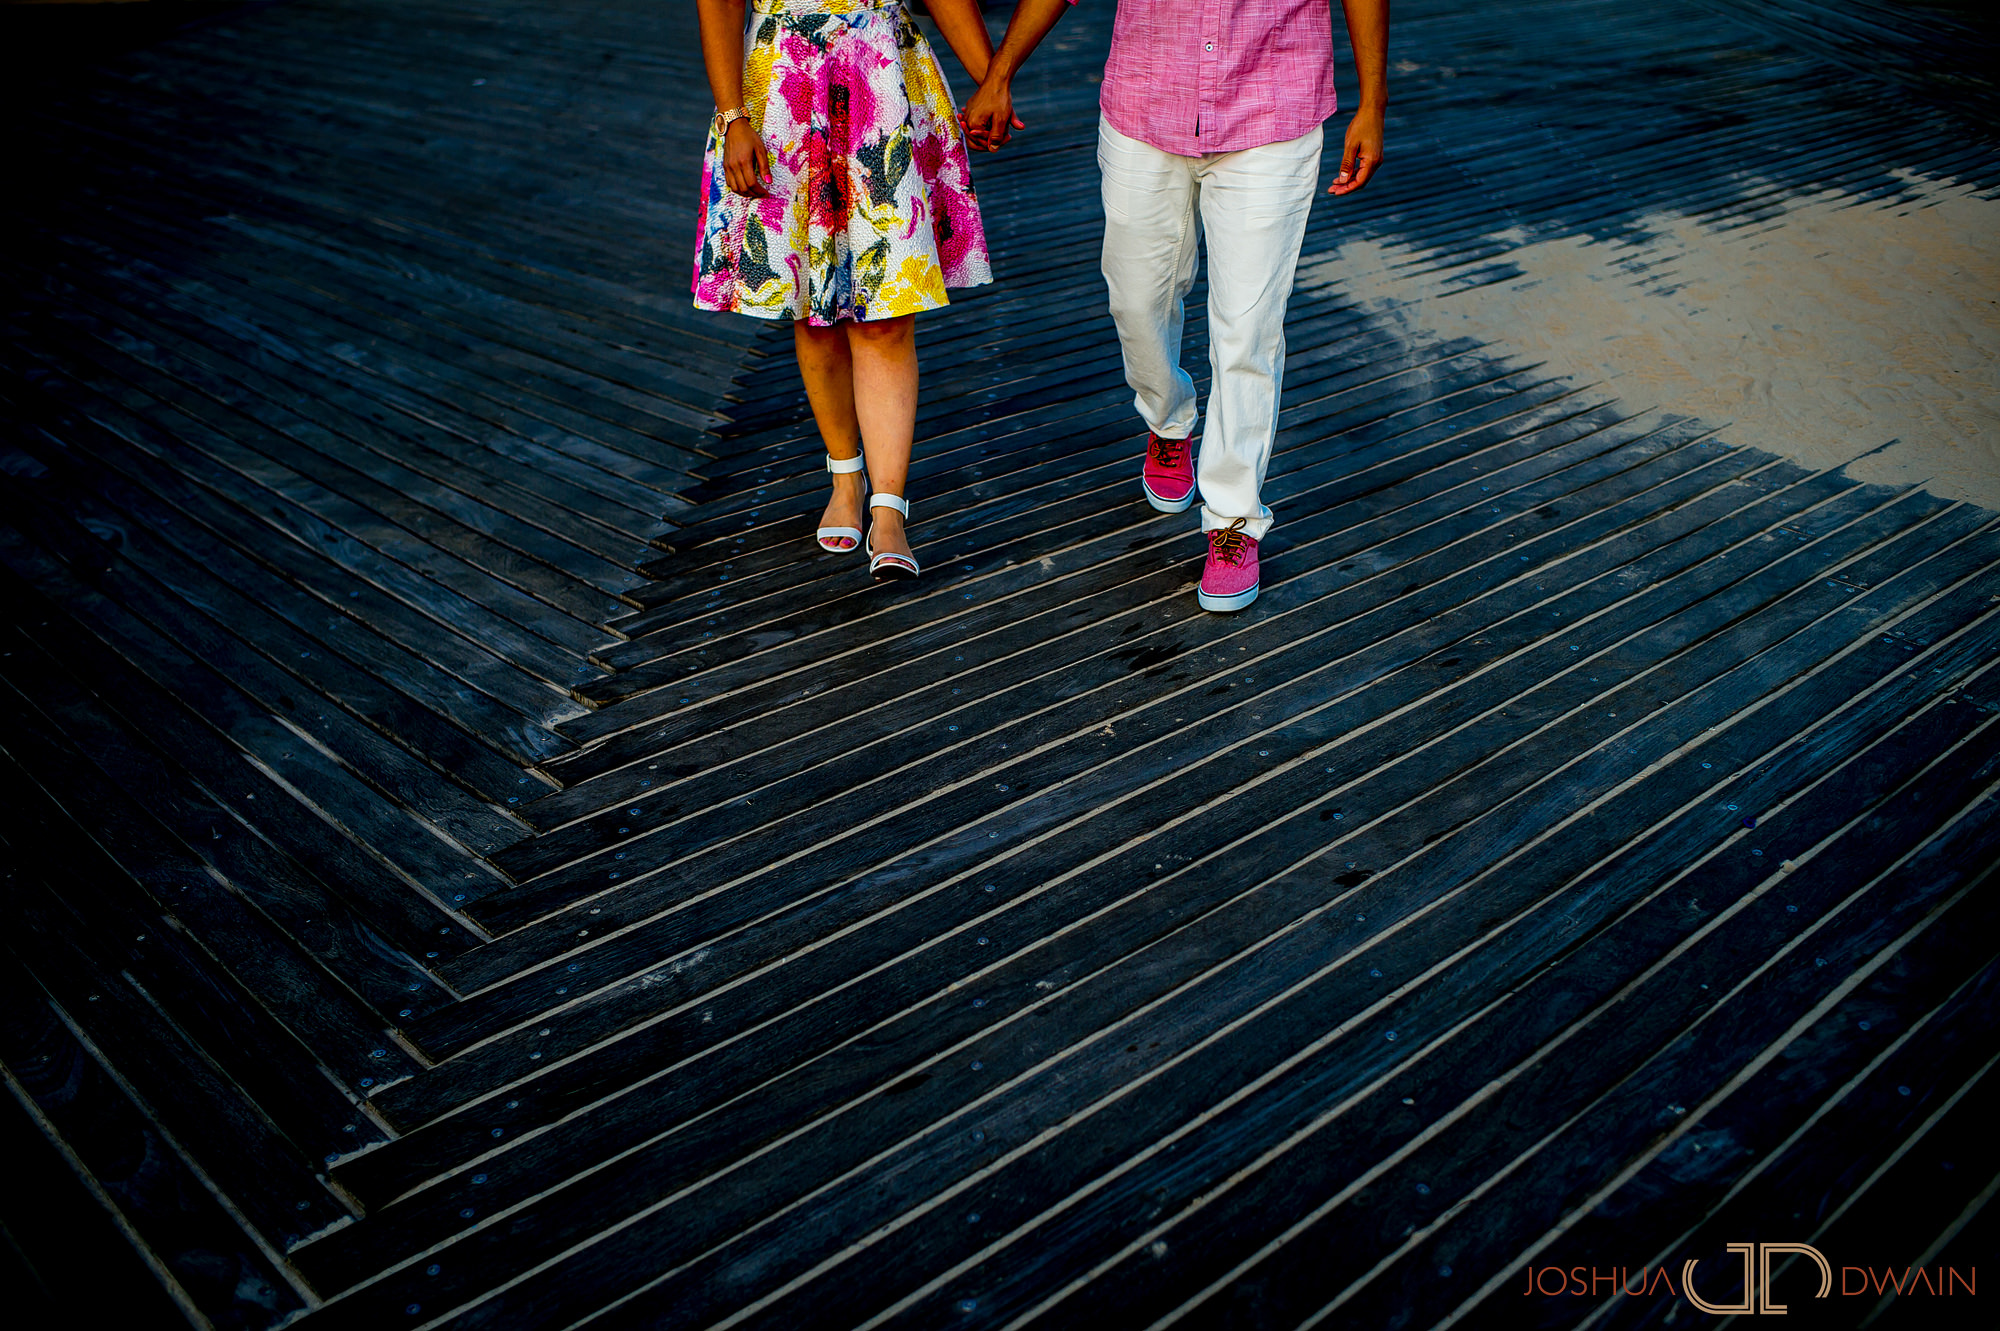 Nicole & Mauricio's Engagement Photos from Coney Island in Brooklyn, NY